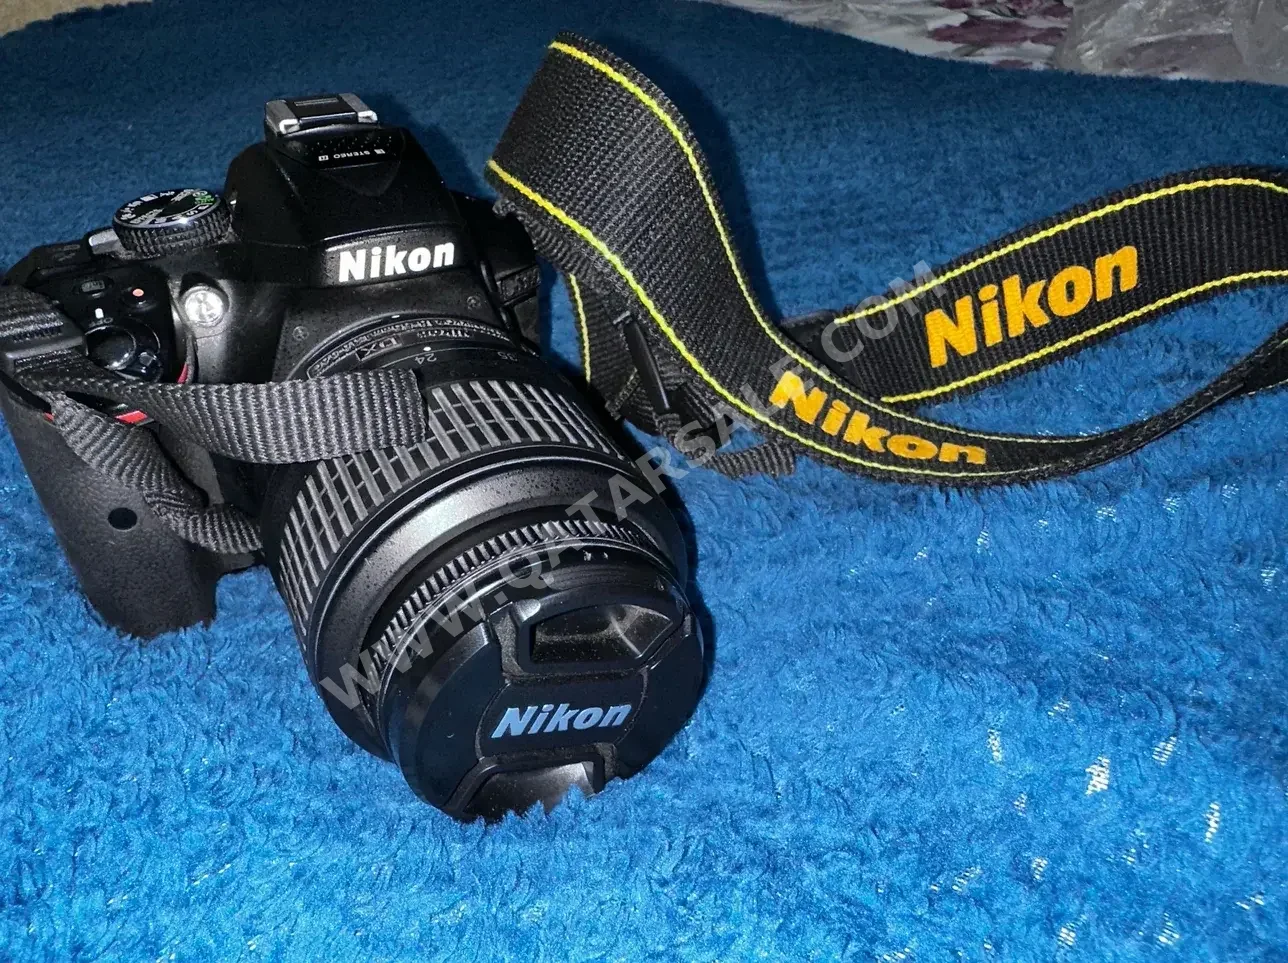 كاميرات رقمية نيكون  دي 5300